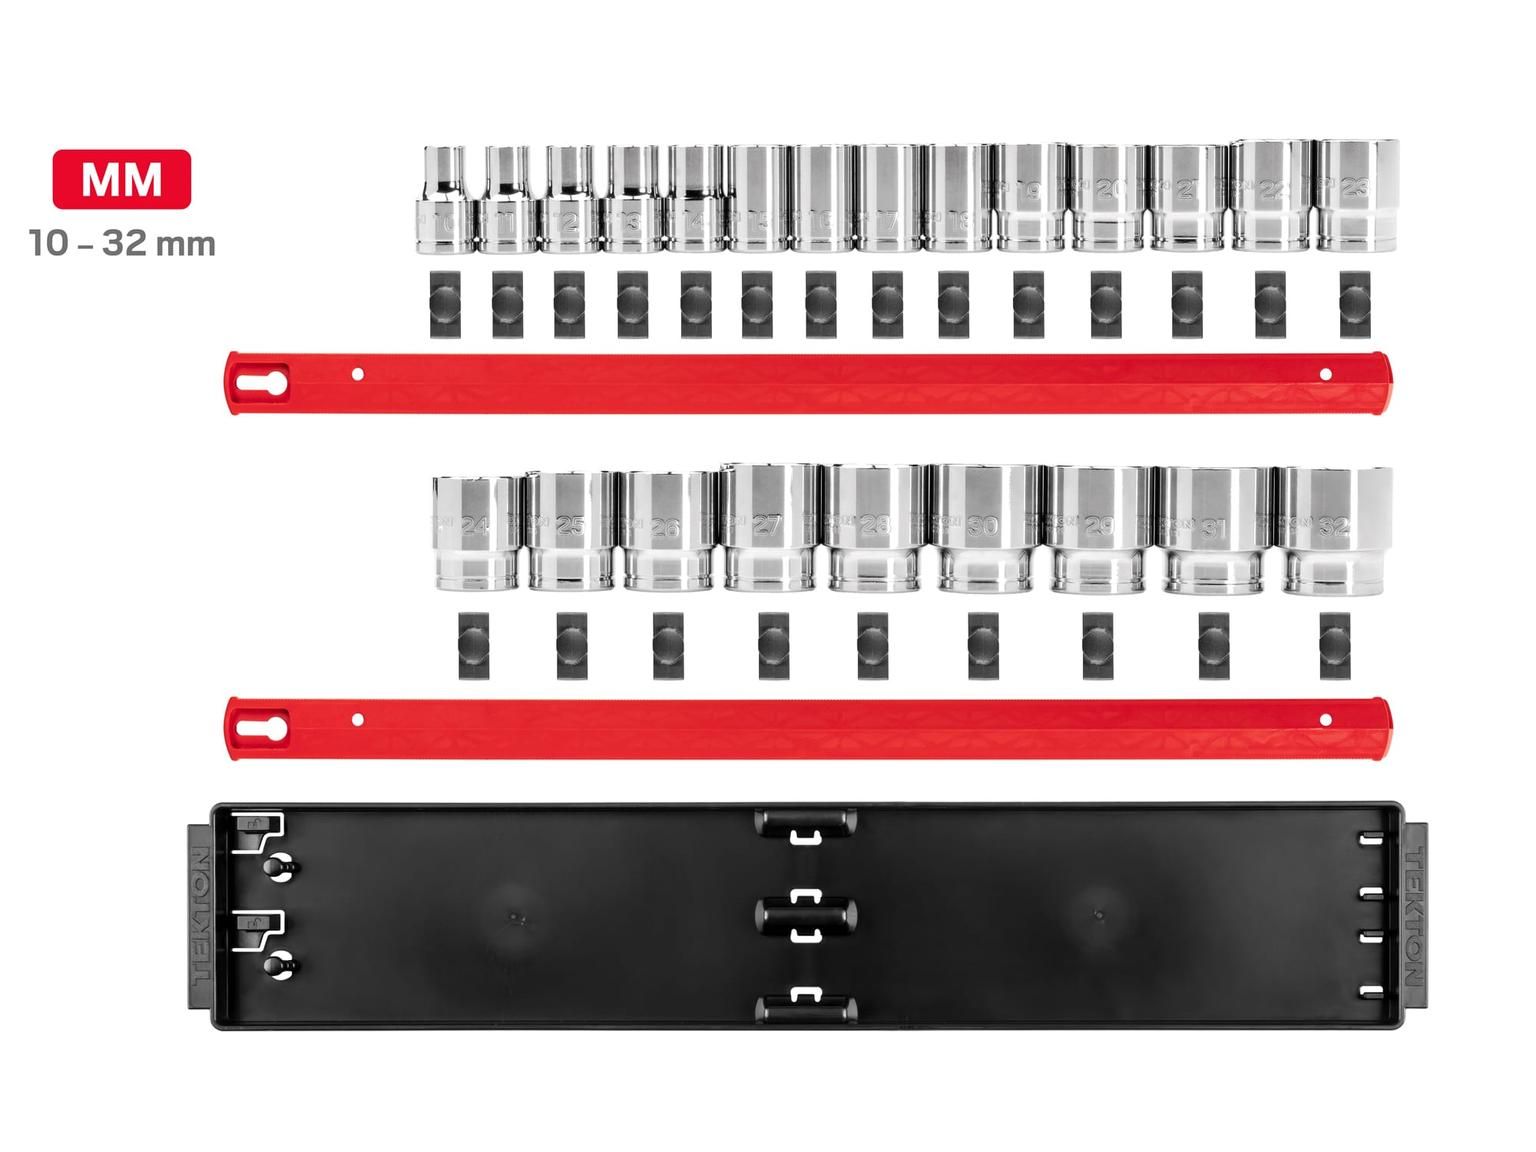 TEKTON SHD92120-T 1/2 Inch Drive 12-Point Socket Set with Rails, 23-Piece (10-32 mm)